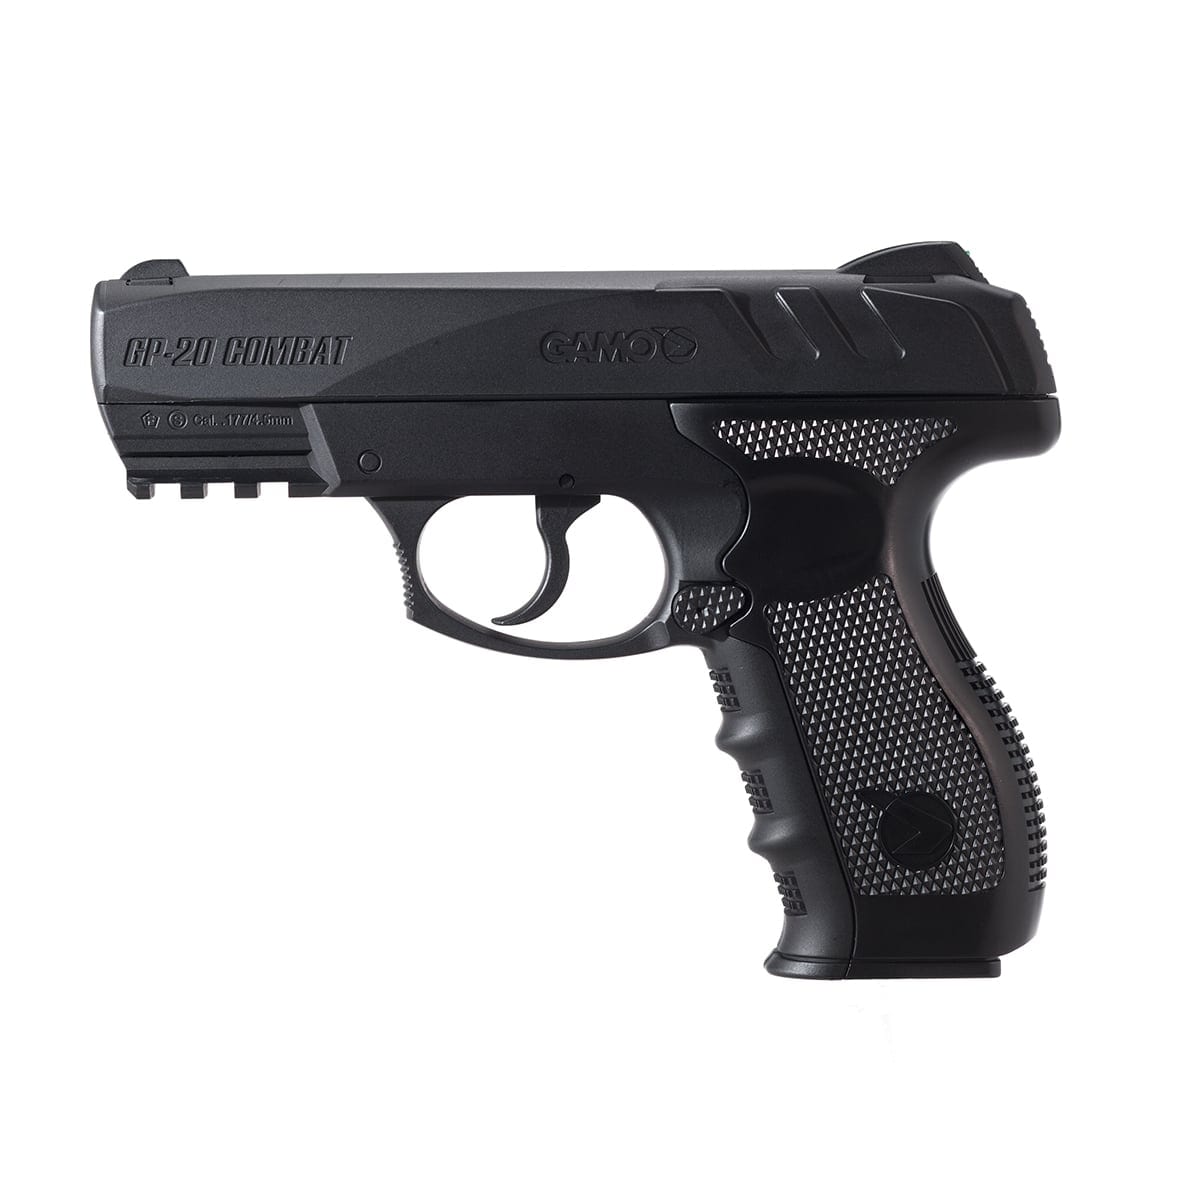 ⭐ Comprar pistola de co2 gamo gp 20 economica ideal para iniciacion